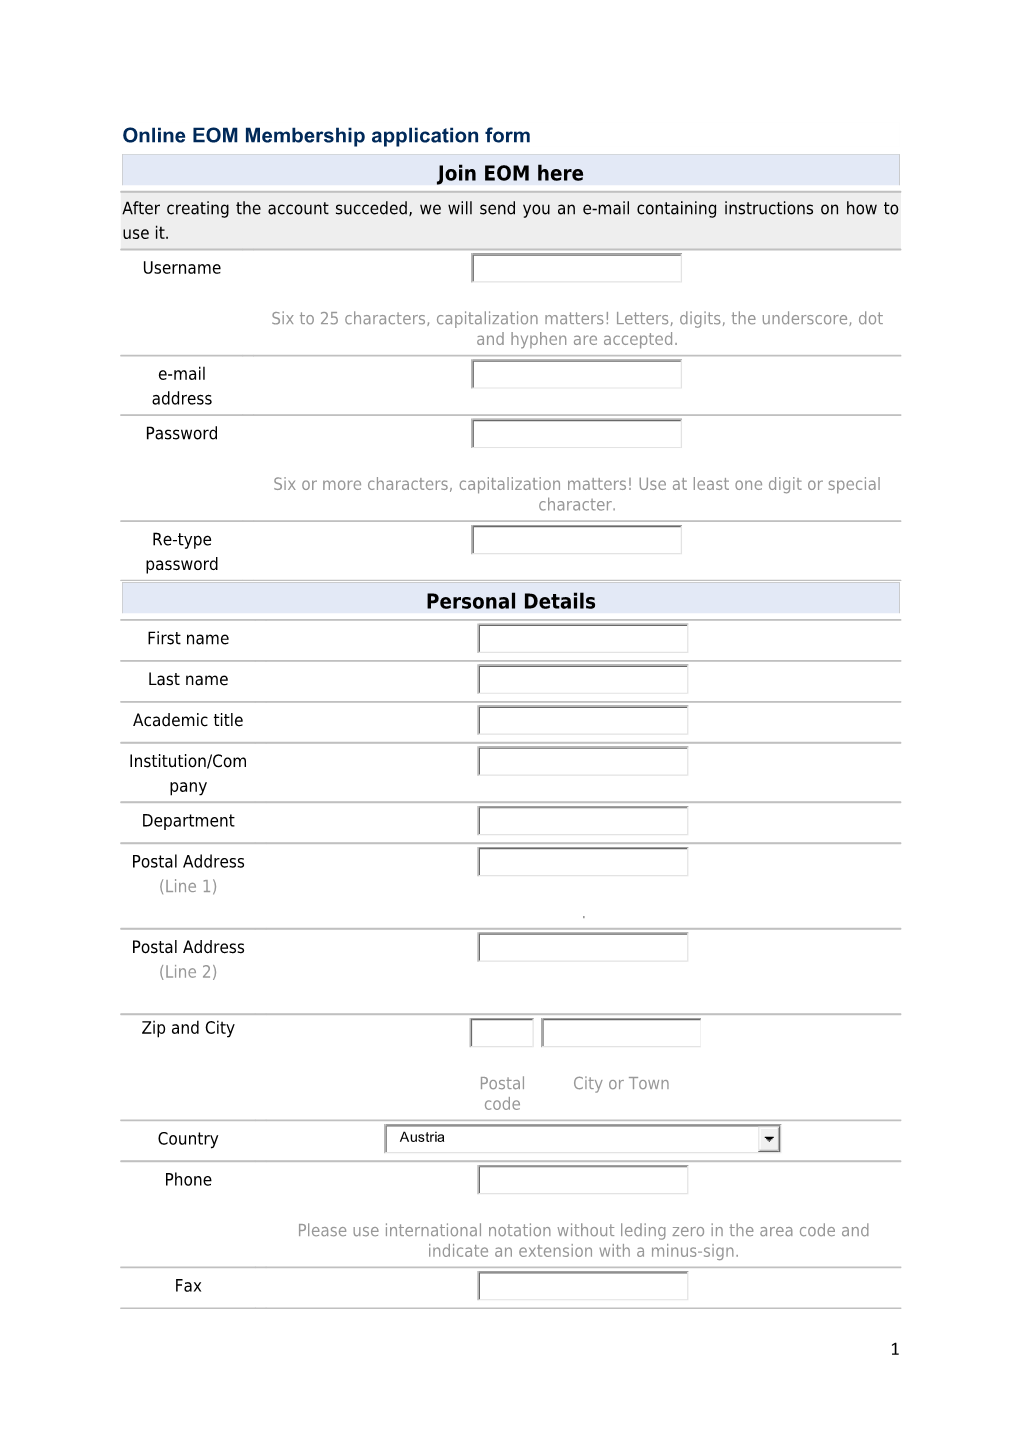 Online EOM Membership Application Form